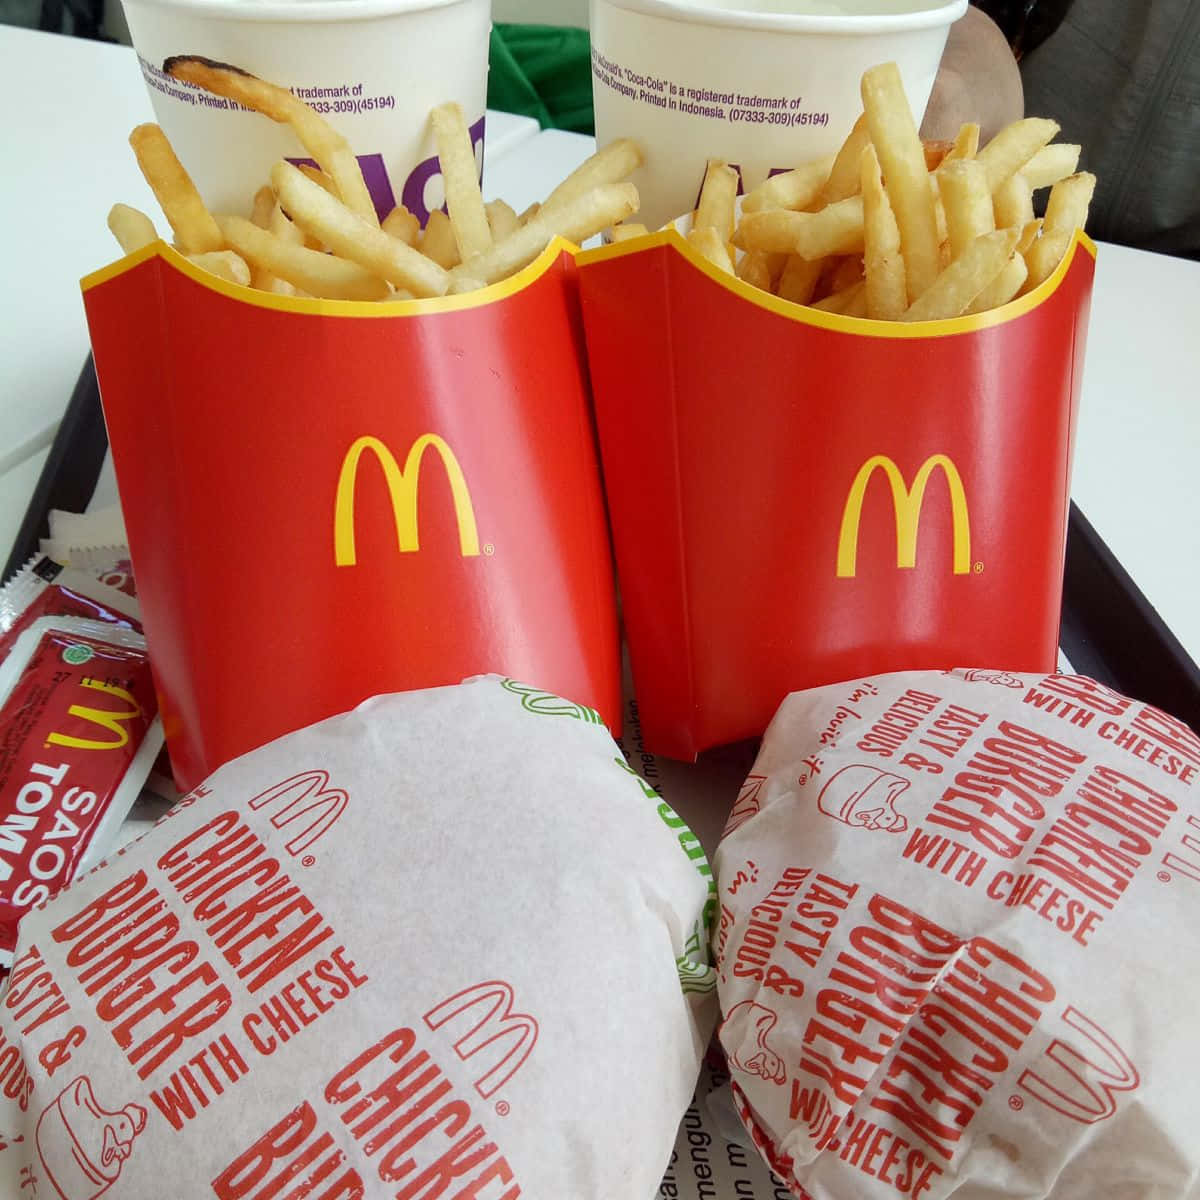 Caption: A delicious spread of McDonald's favorites